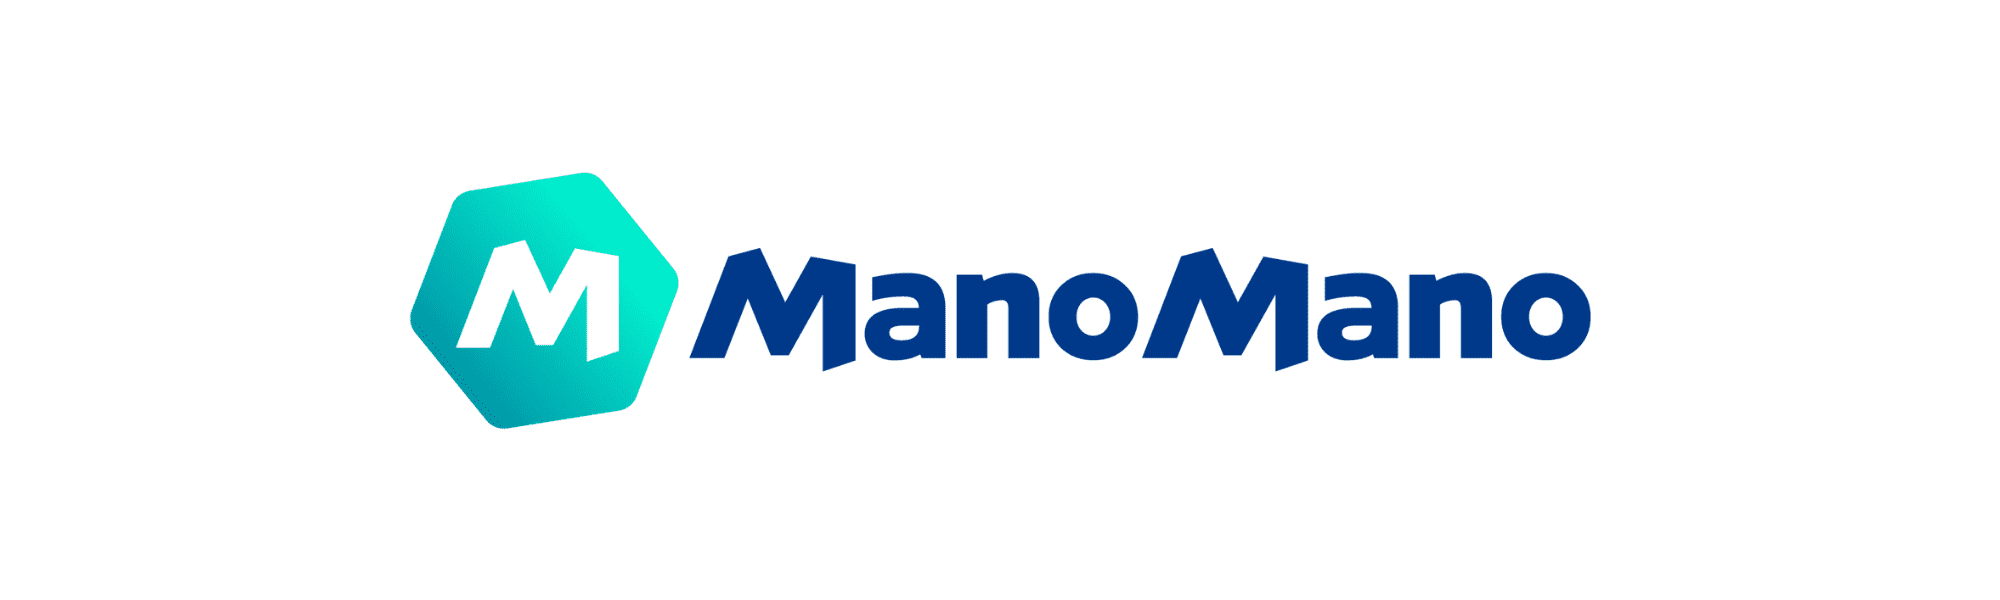 Logo del marketplace ManoMano